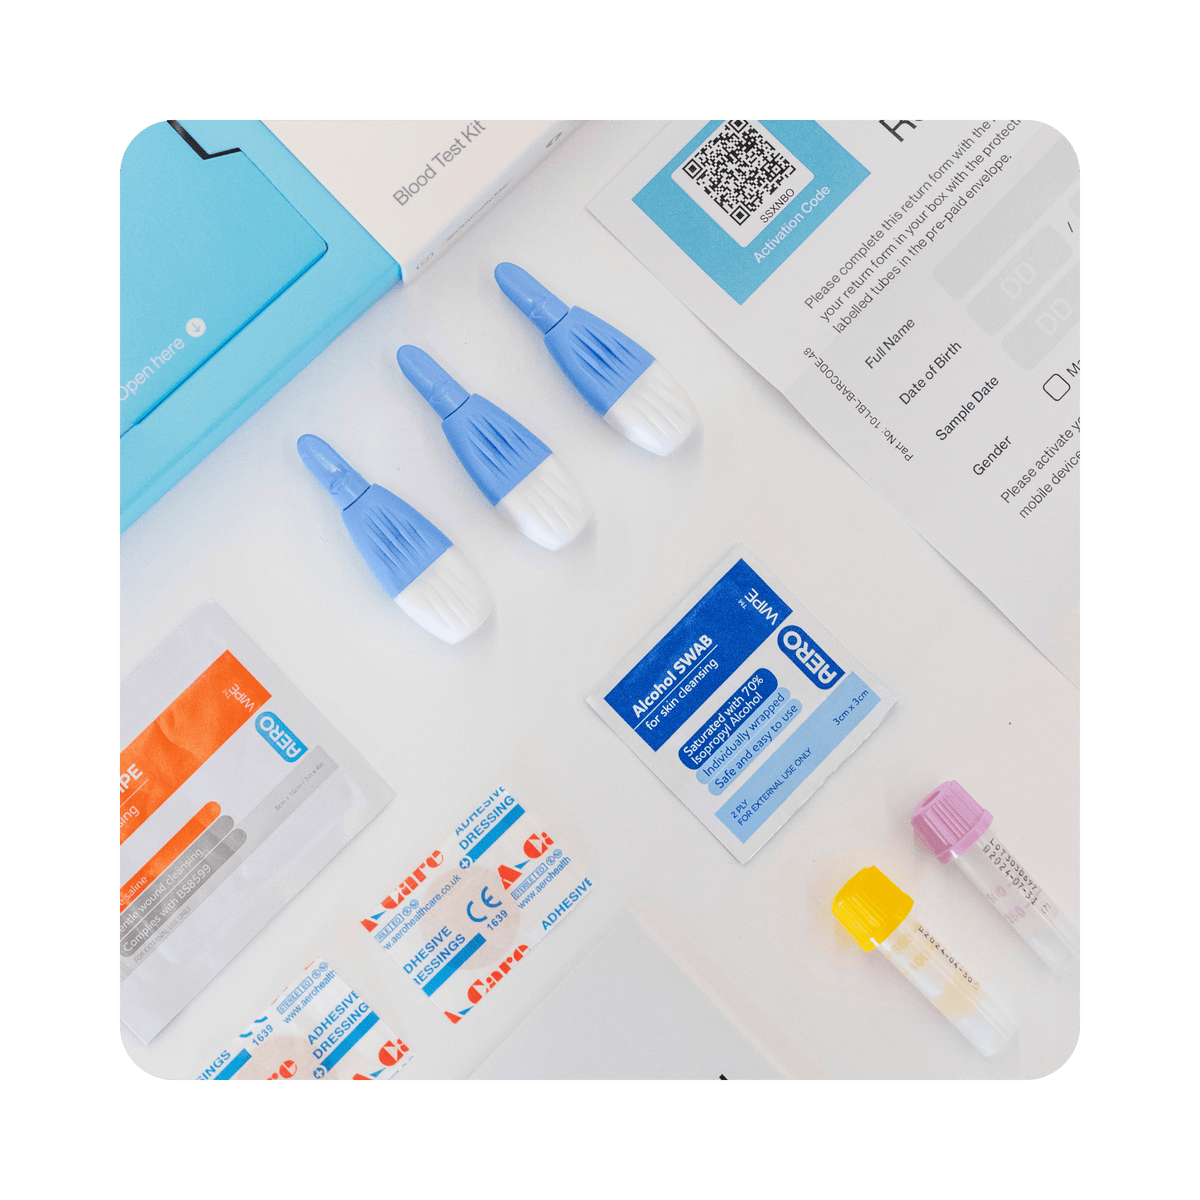 Testosterone Test &amp; Health Platform Test Kit OptimallyMe 